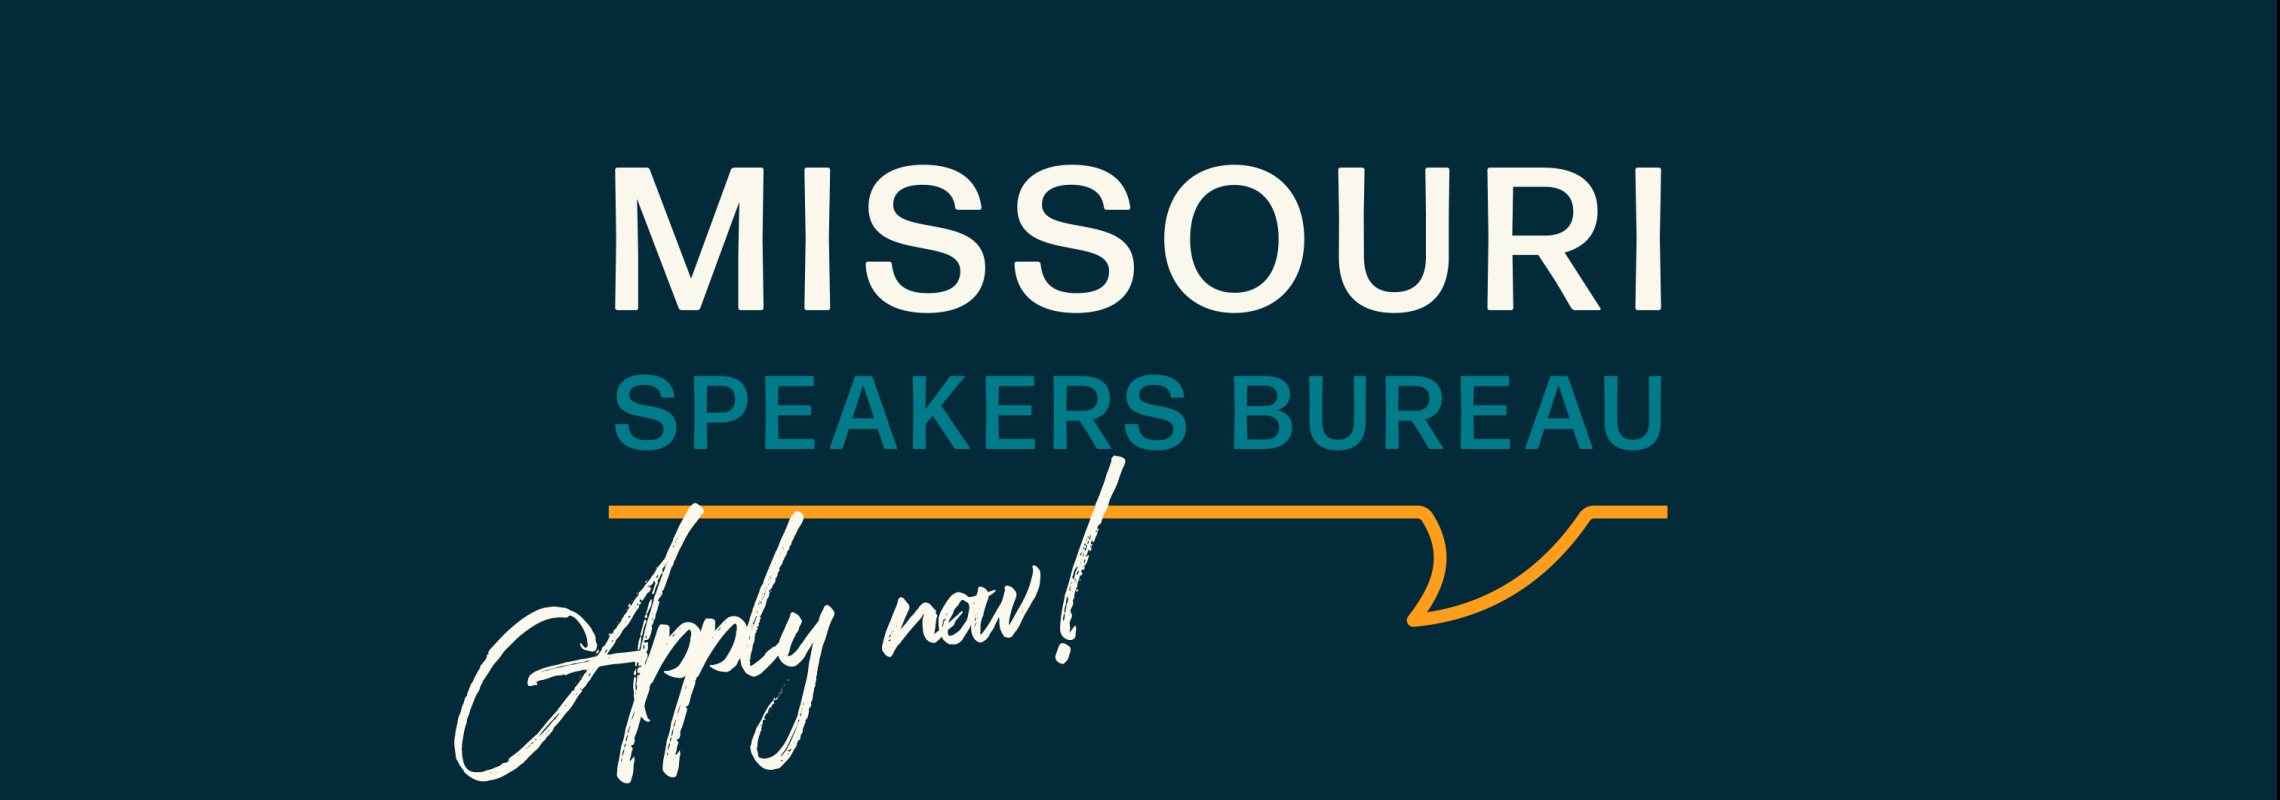 Missouri Speakers Bureau - apply now